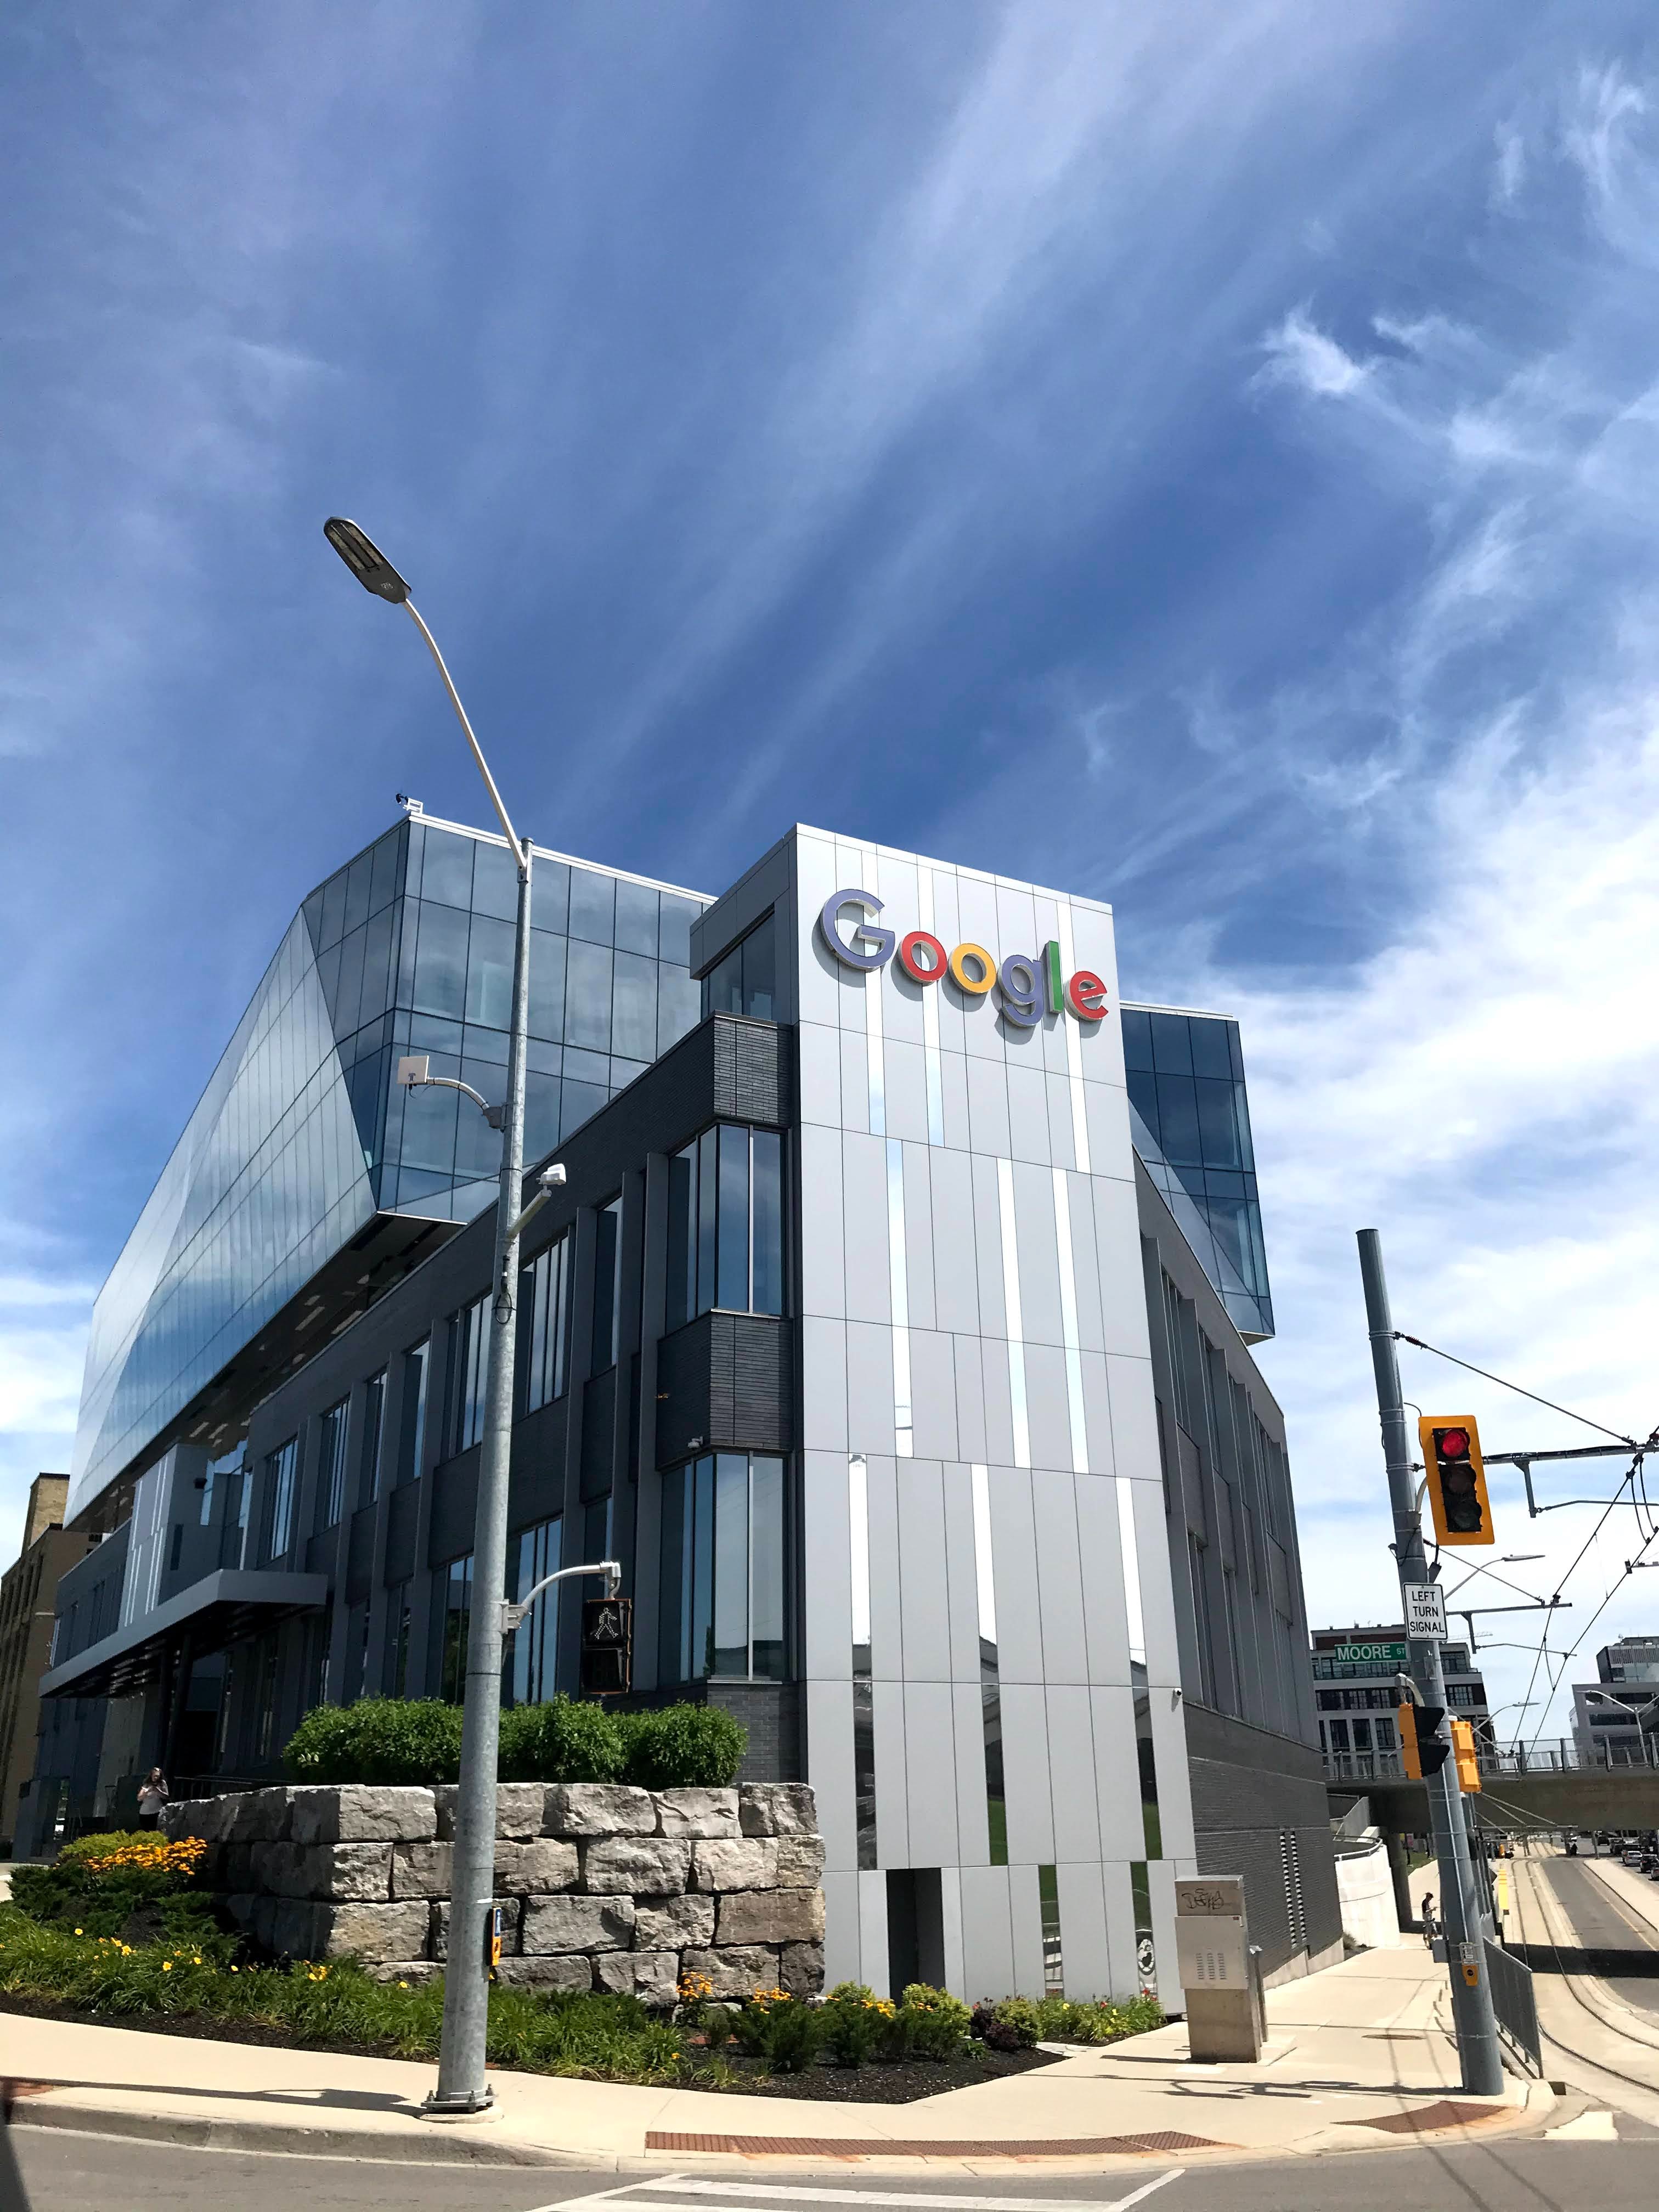 Google Office Building